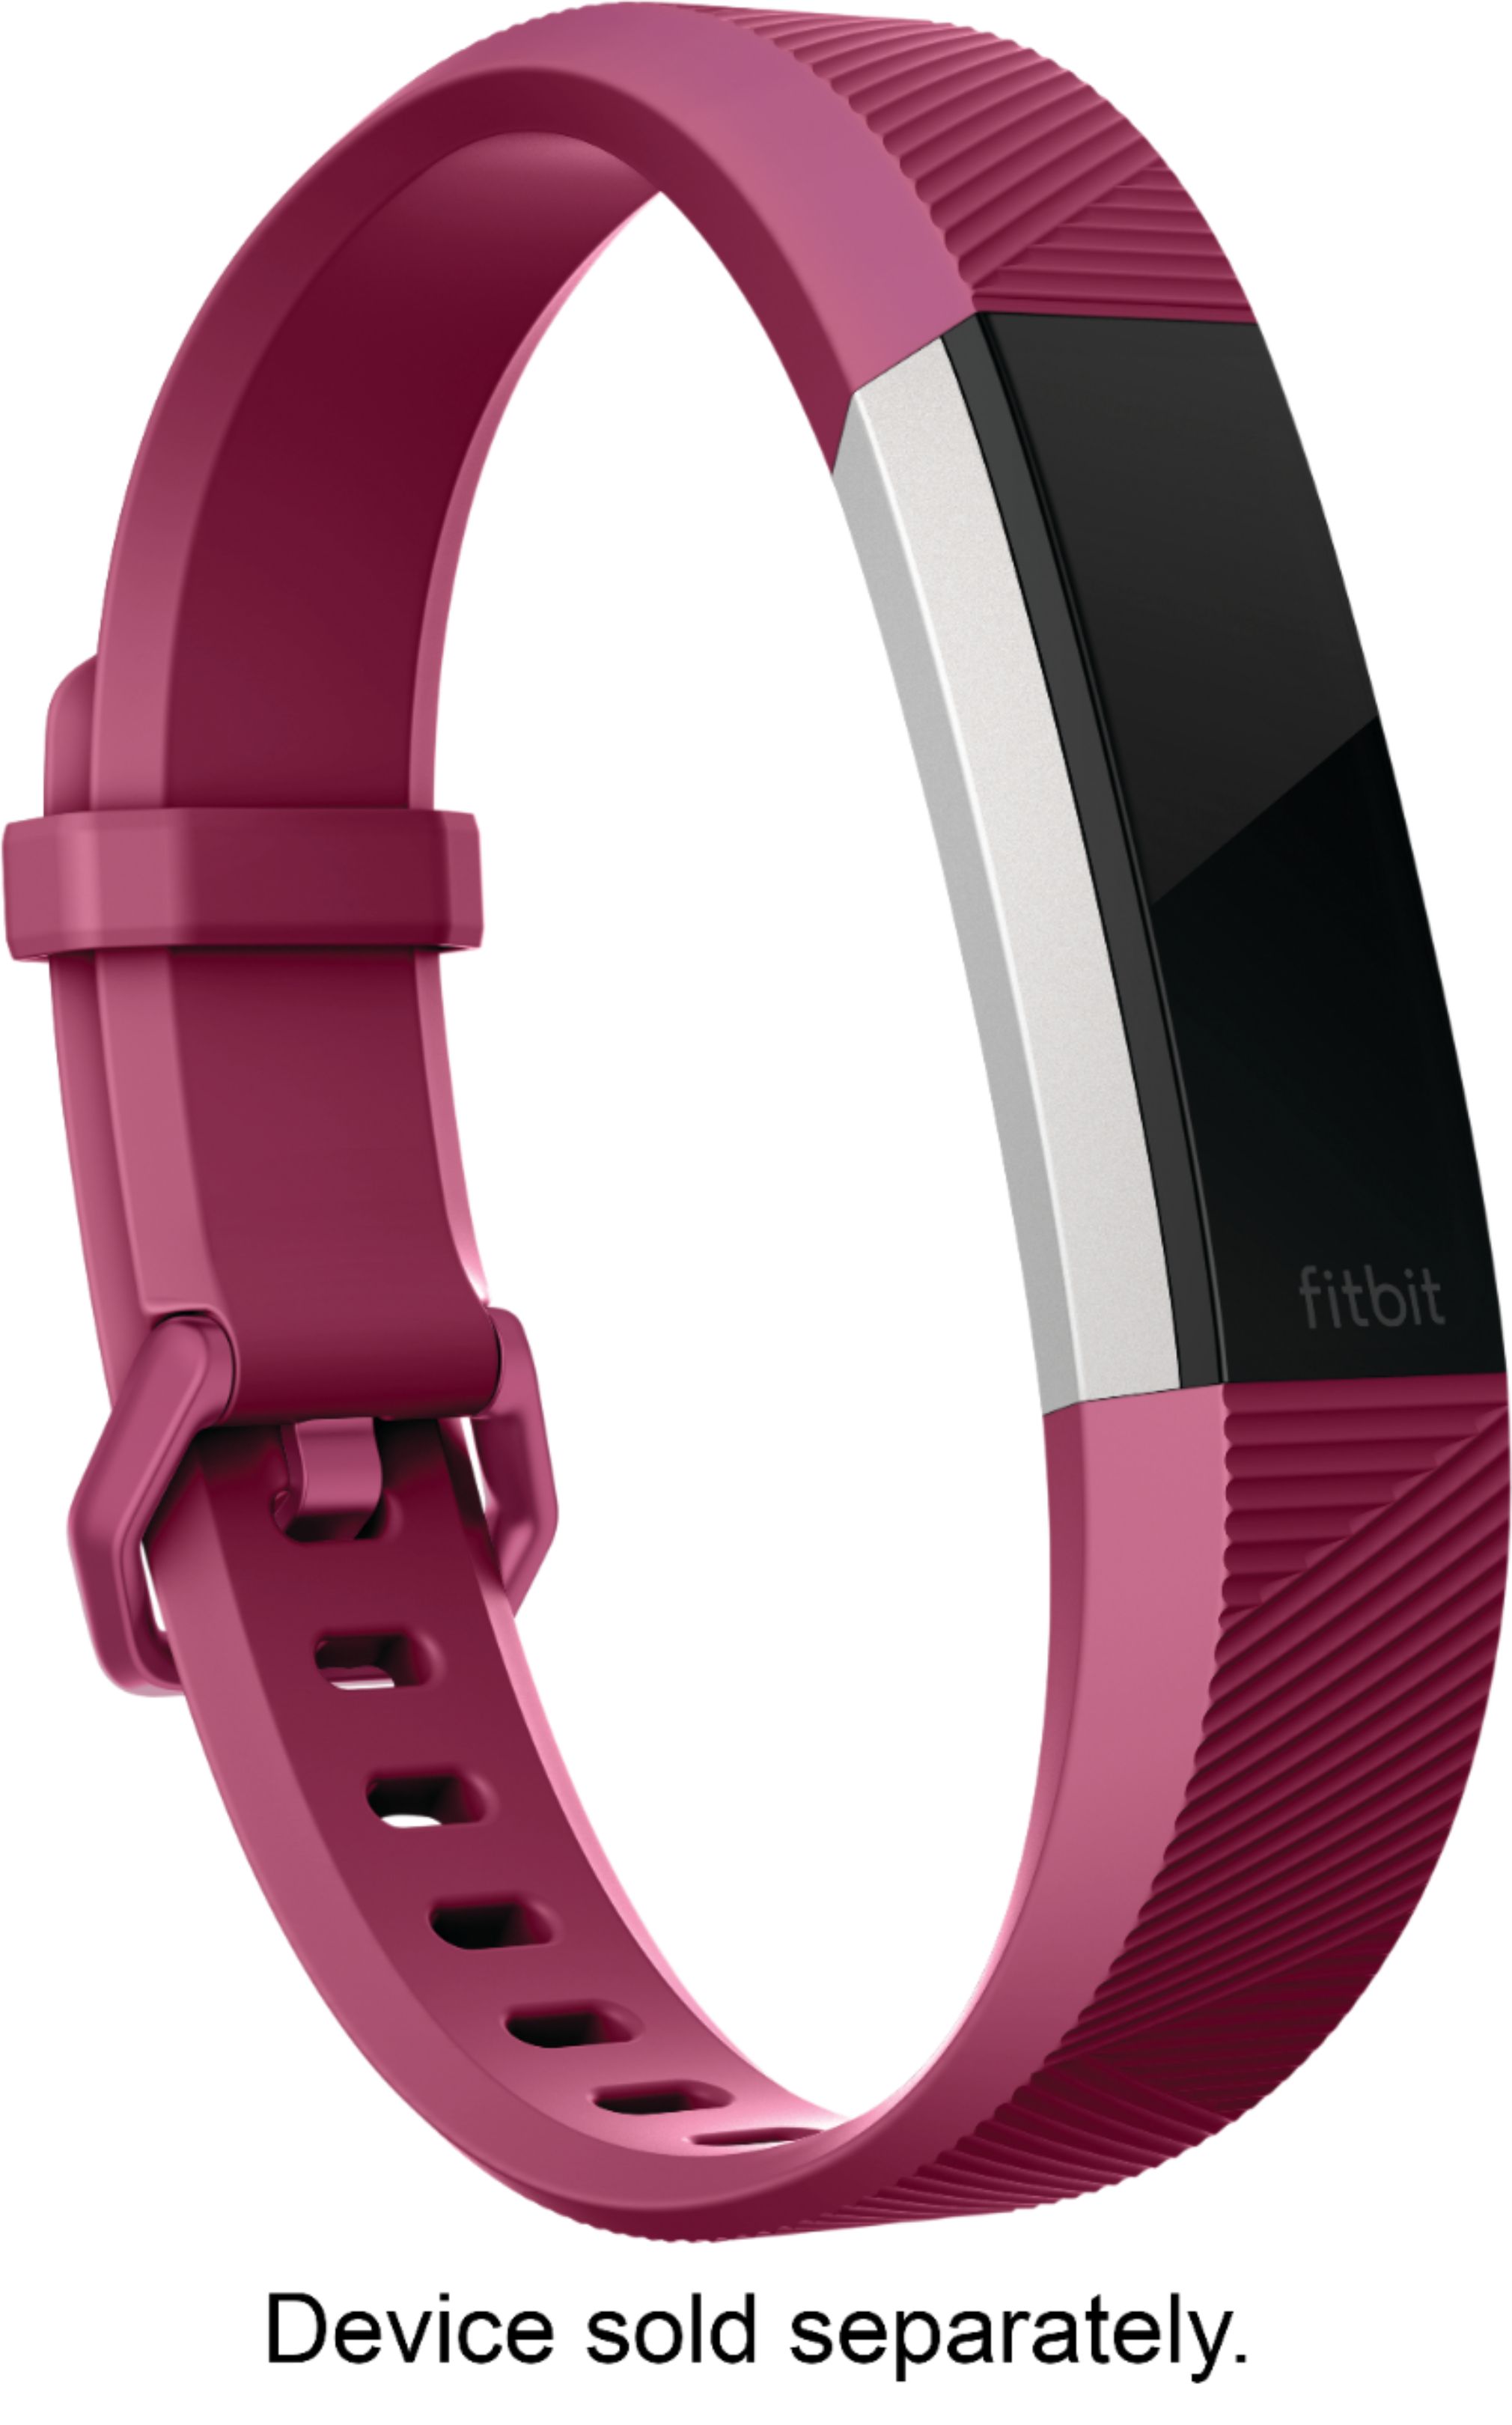  Classic Wristband for Fitbit Alta / Alta HR Activity Trackers - Small - Fuchsia